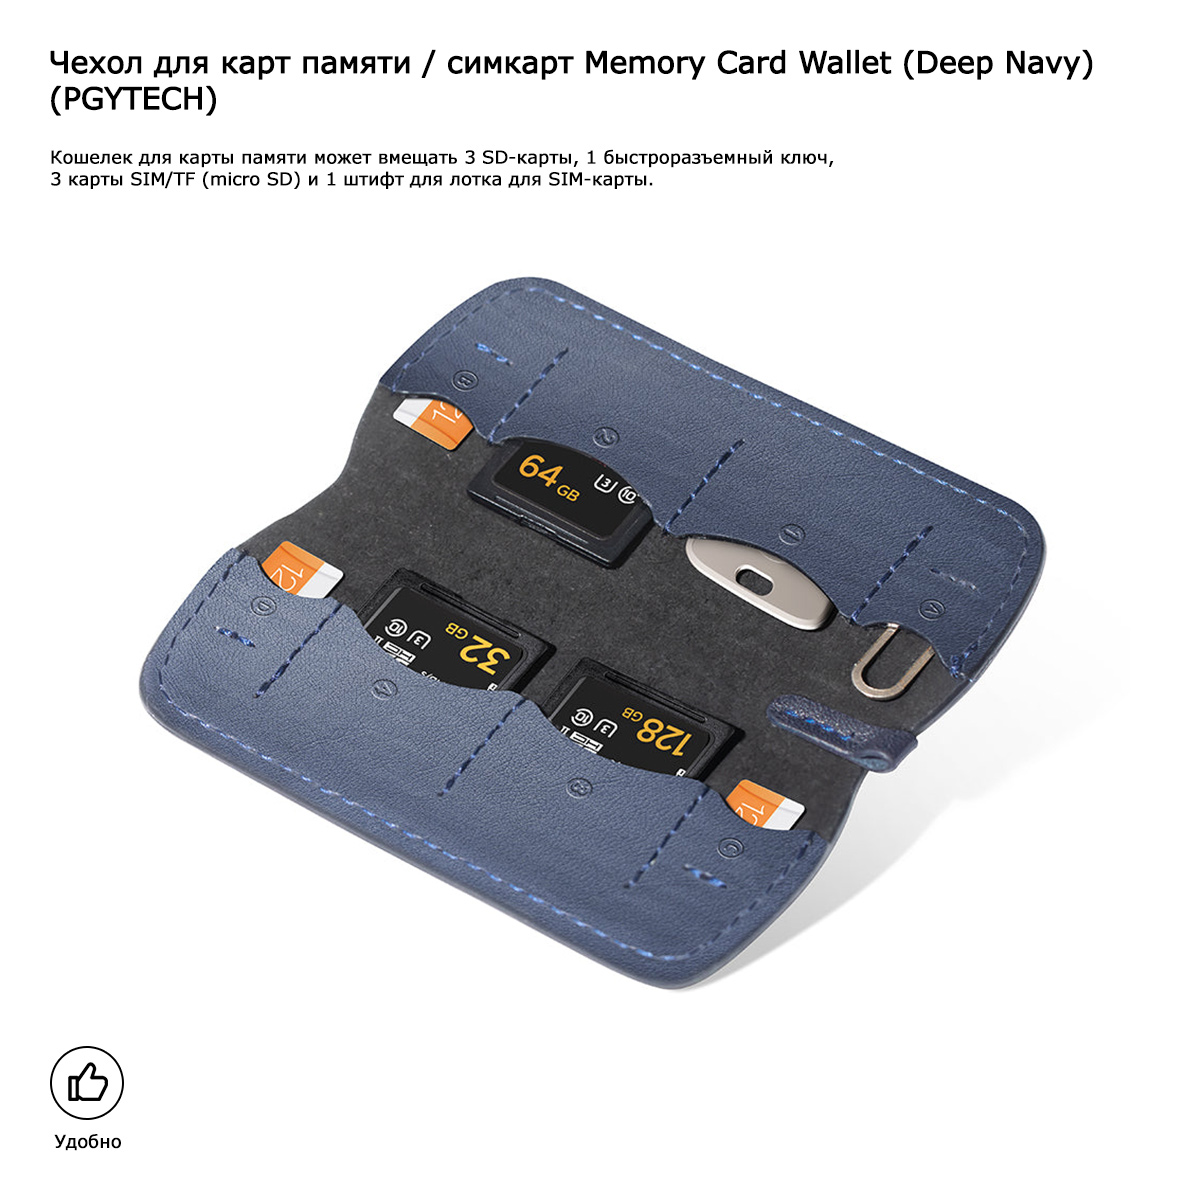 Чехол для карт памяти / симкарт Memory Card Wallet (Deep Navy) (PGYTECH) (P-CB-036)